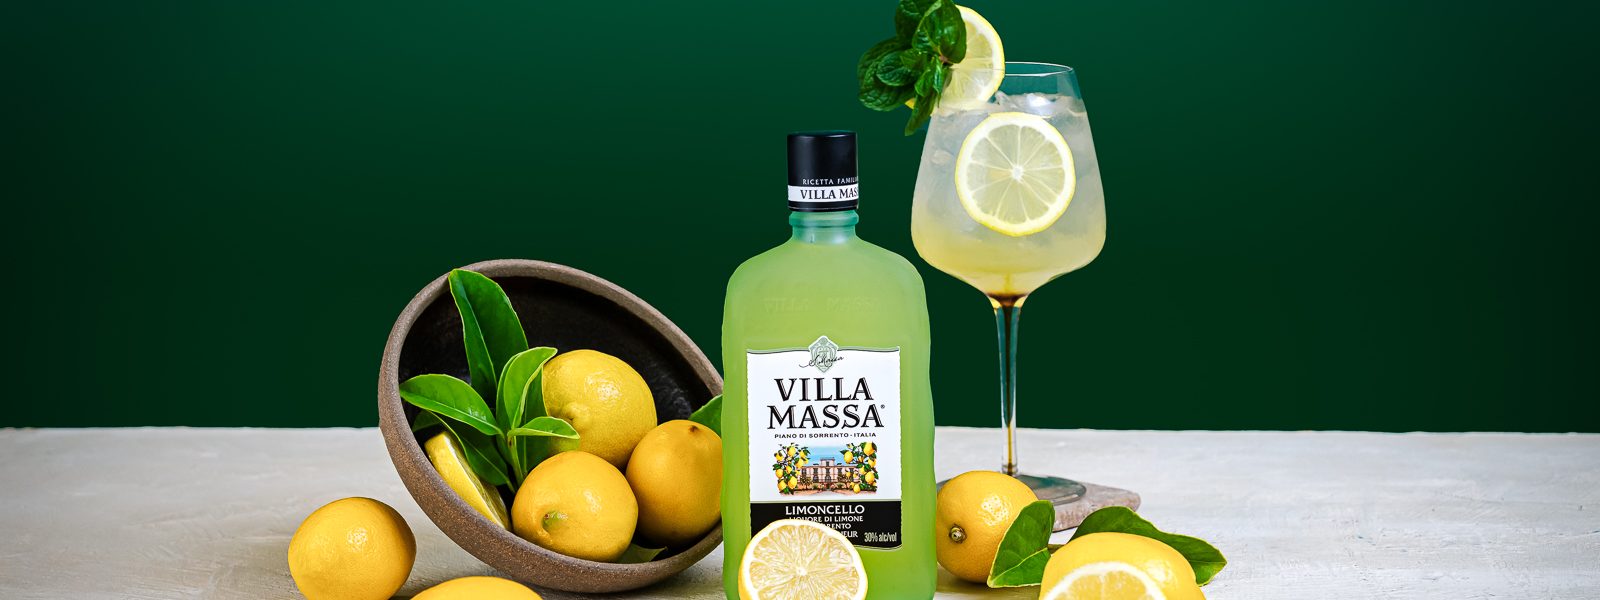 Villa Massa Limoncello Spritz cocktail with Villa Massa Limoncello bottle and lemons